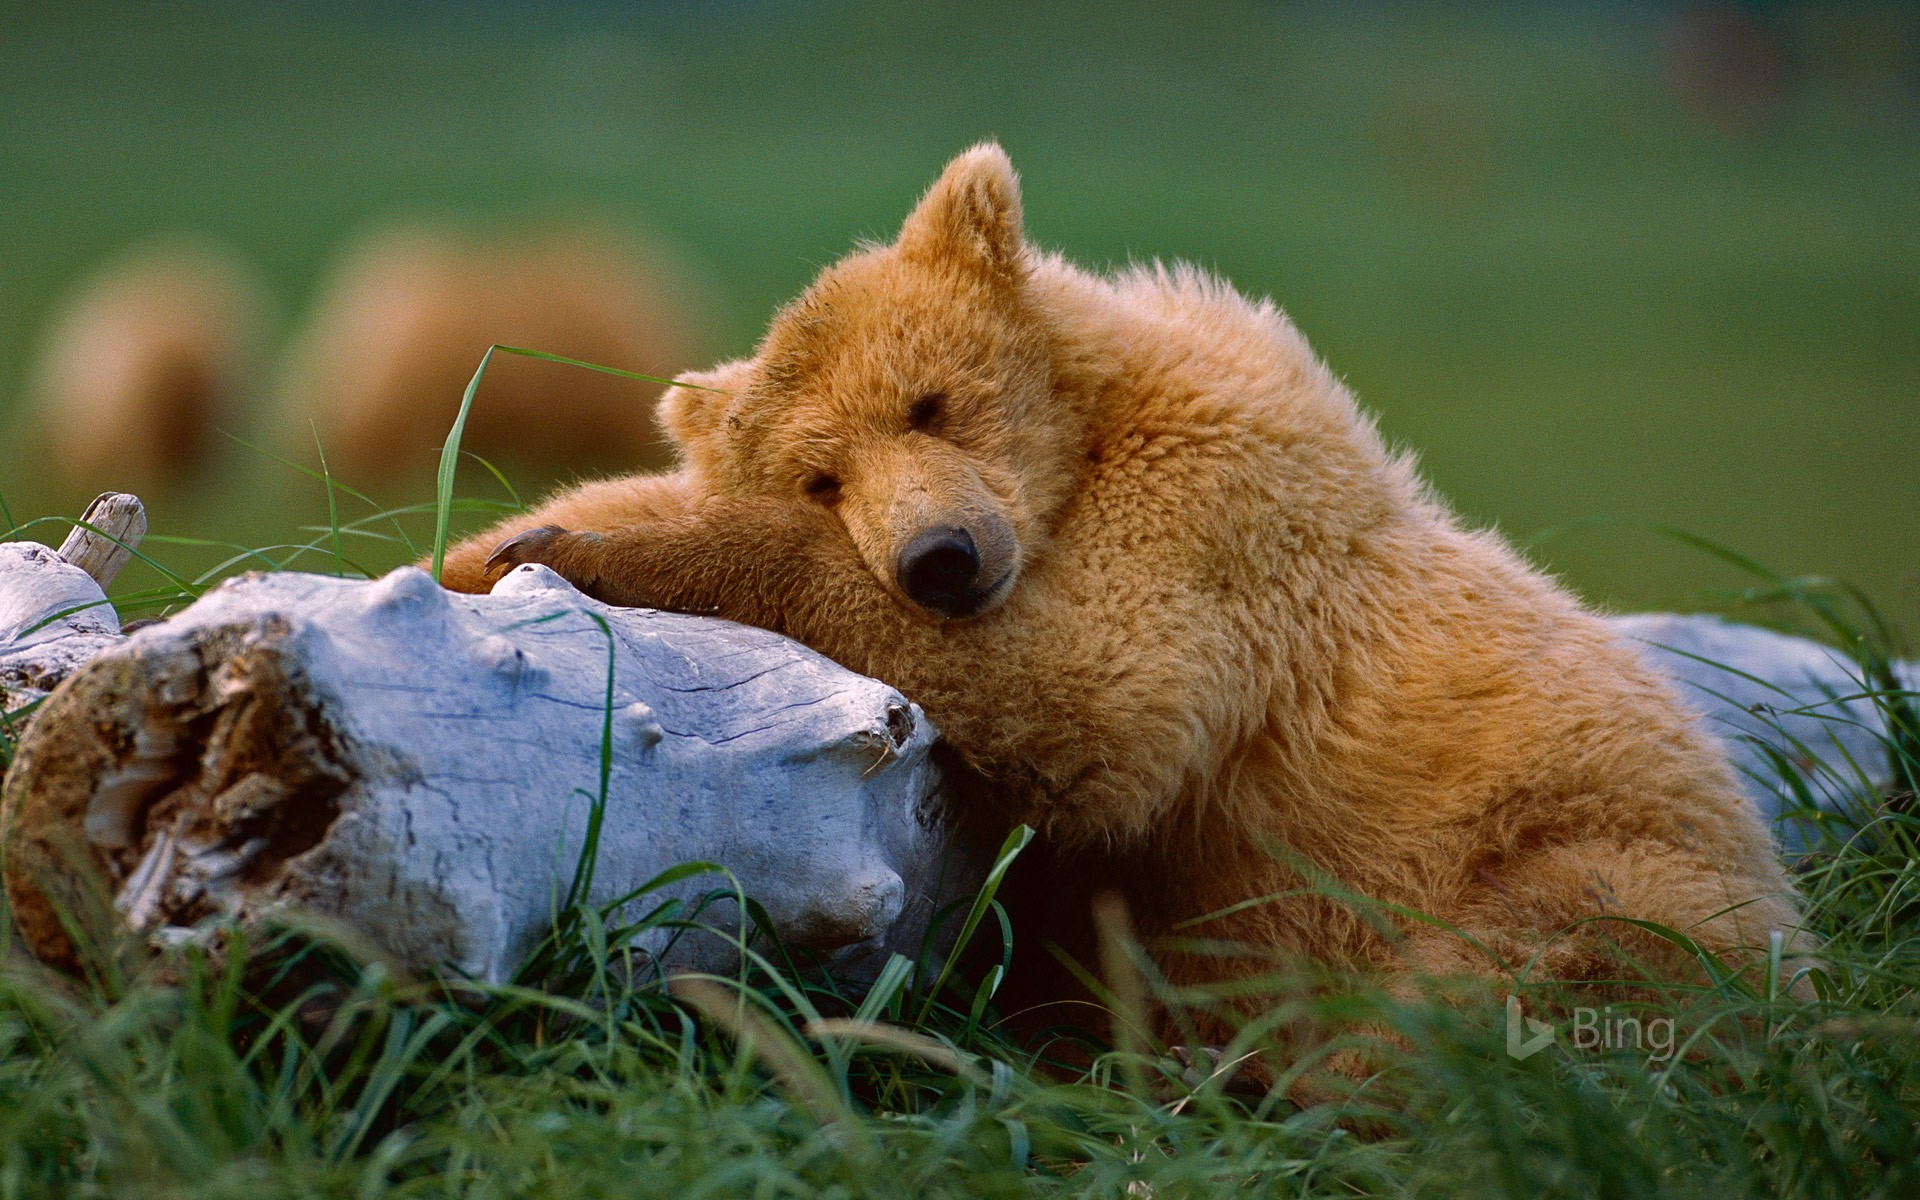 Napping grizzly bear cub, Katmai National Park and Preserve, Alaska